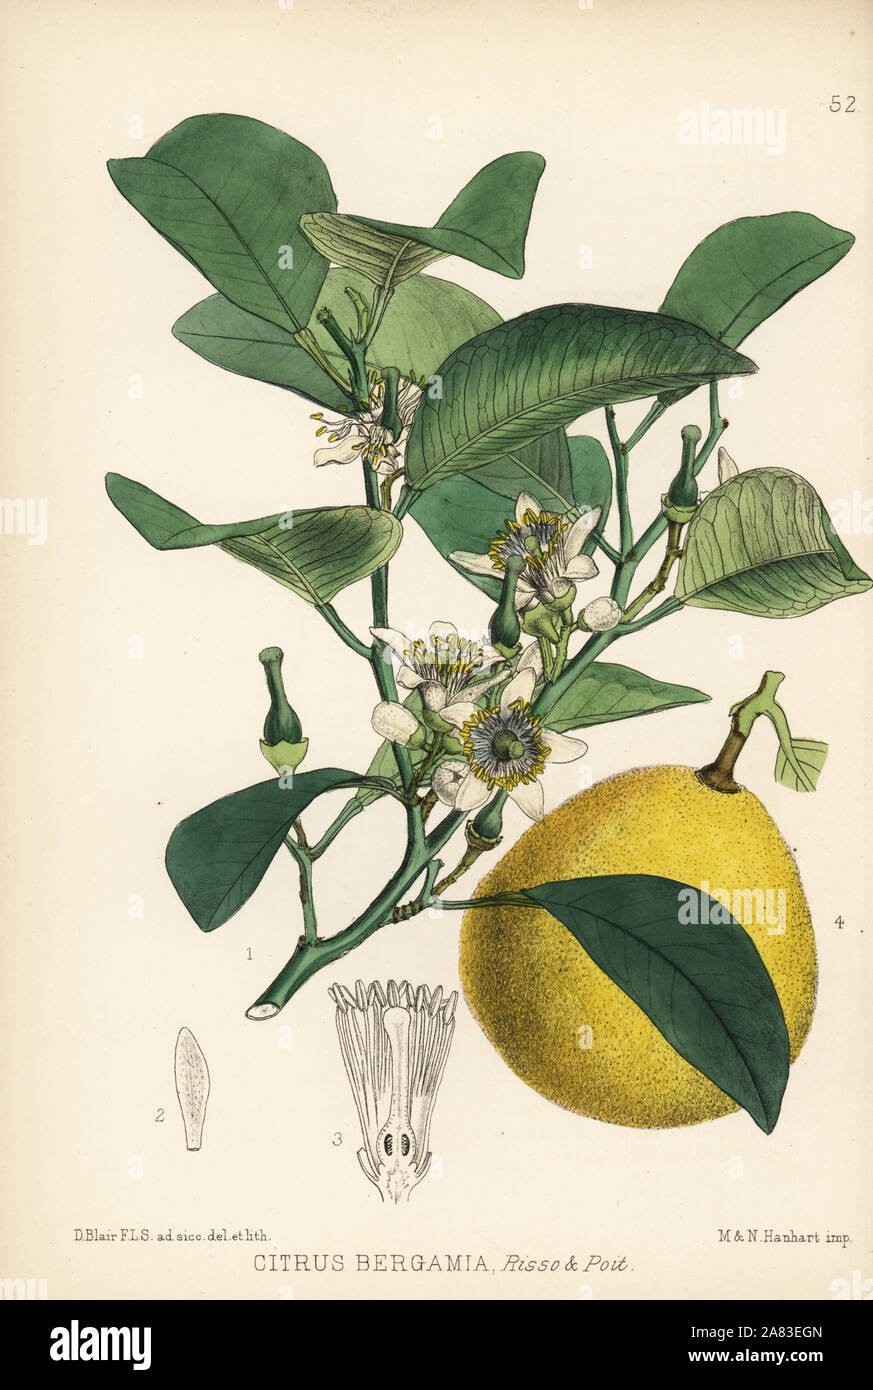 Bergamot lemon, Citrus limon (Citrus bergamia). Handcoloured lithograph by Hanhart after a botanical illustration by David Blair from Robert Bentley and Henry Trimen's Medicinal Plants, London, 1880. Stock Photo